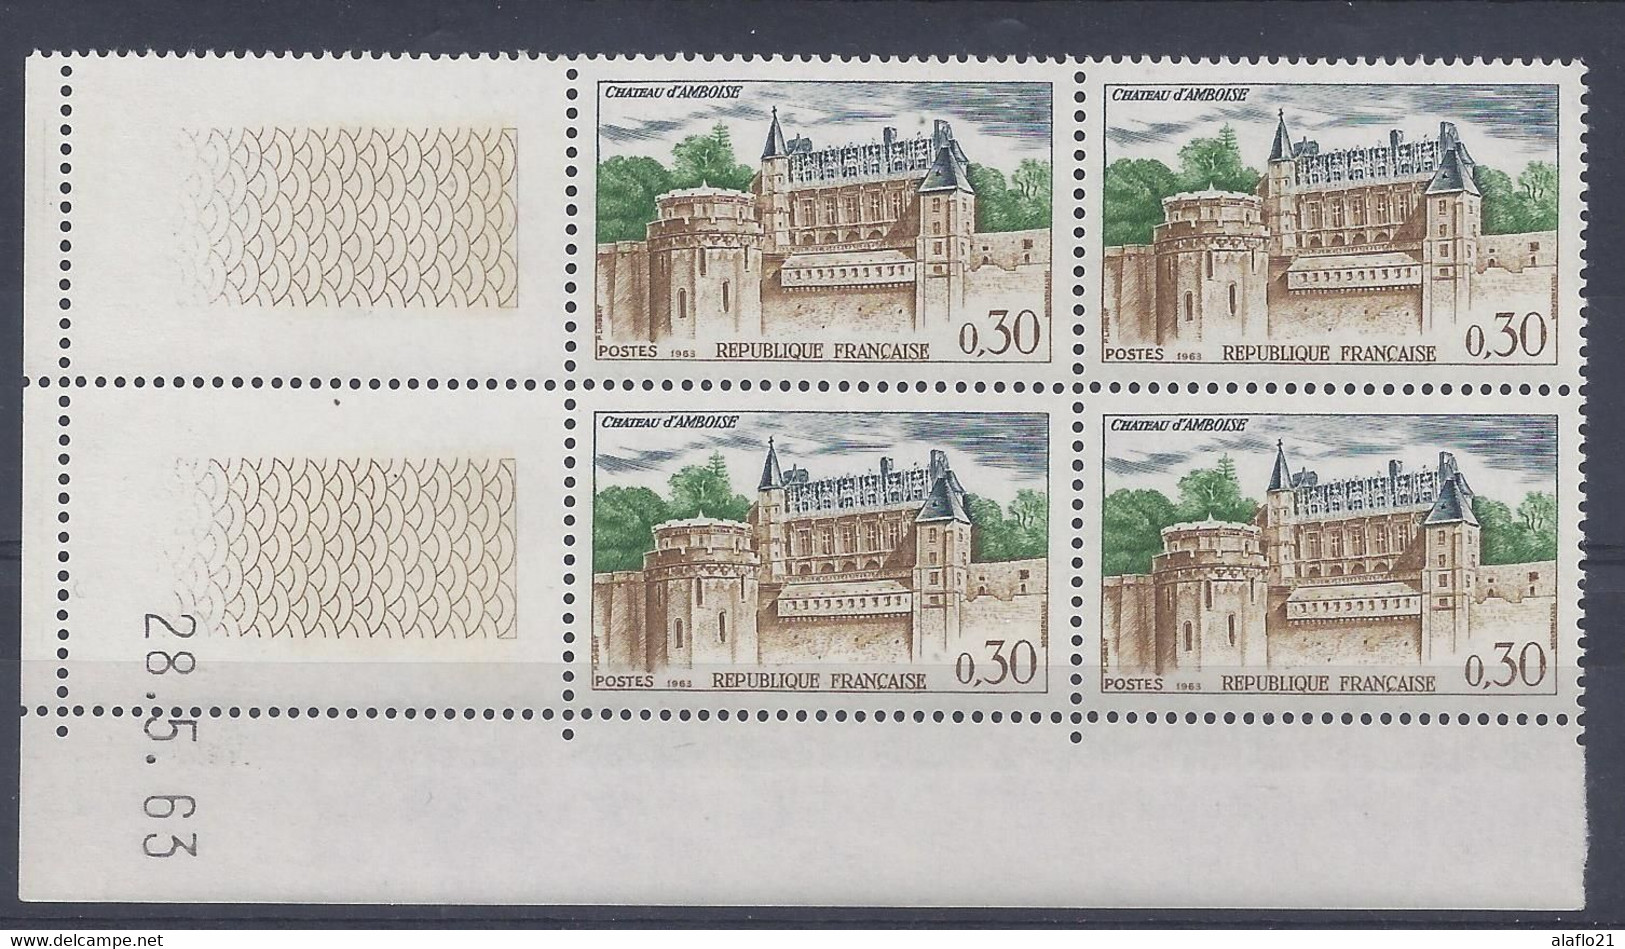 CHATEAU D'AMBOISE N° 1390 - Bloc De 4 COIN DATE - NEUF SANS CHARNIERE - 28/5/63 - 1960-1969